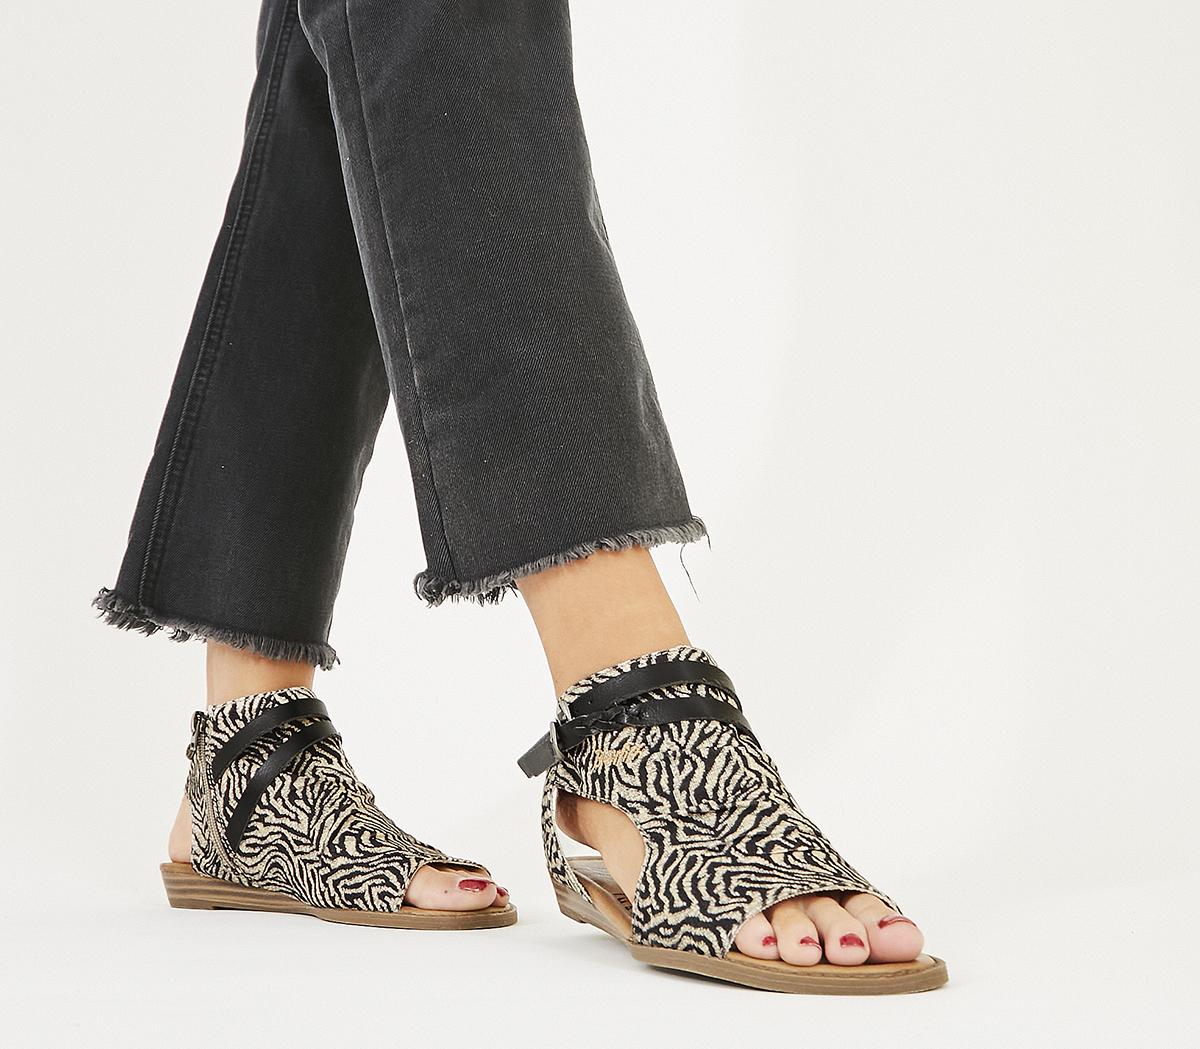 Blowfish Malibu Blumoon Sandal Zebra - Women’s Sandals